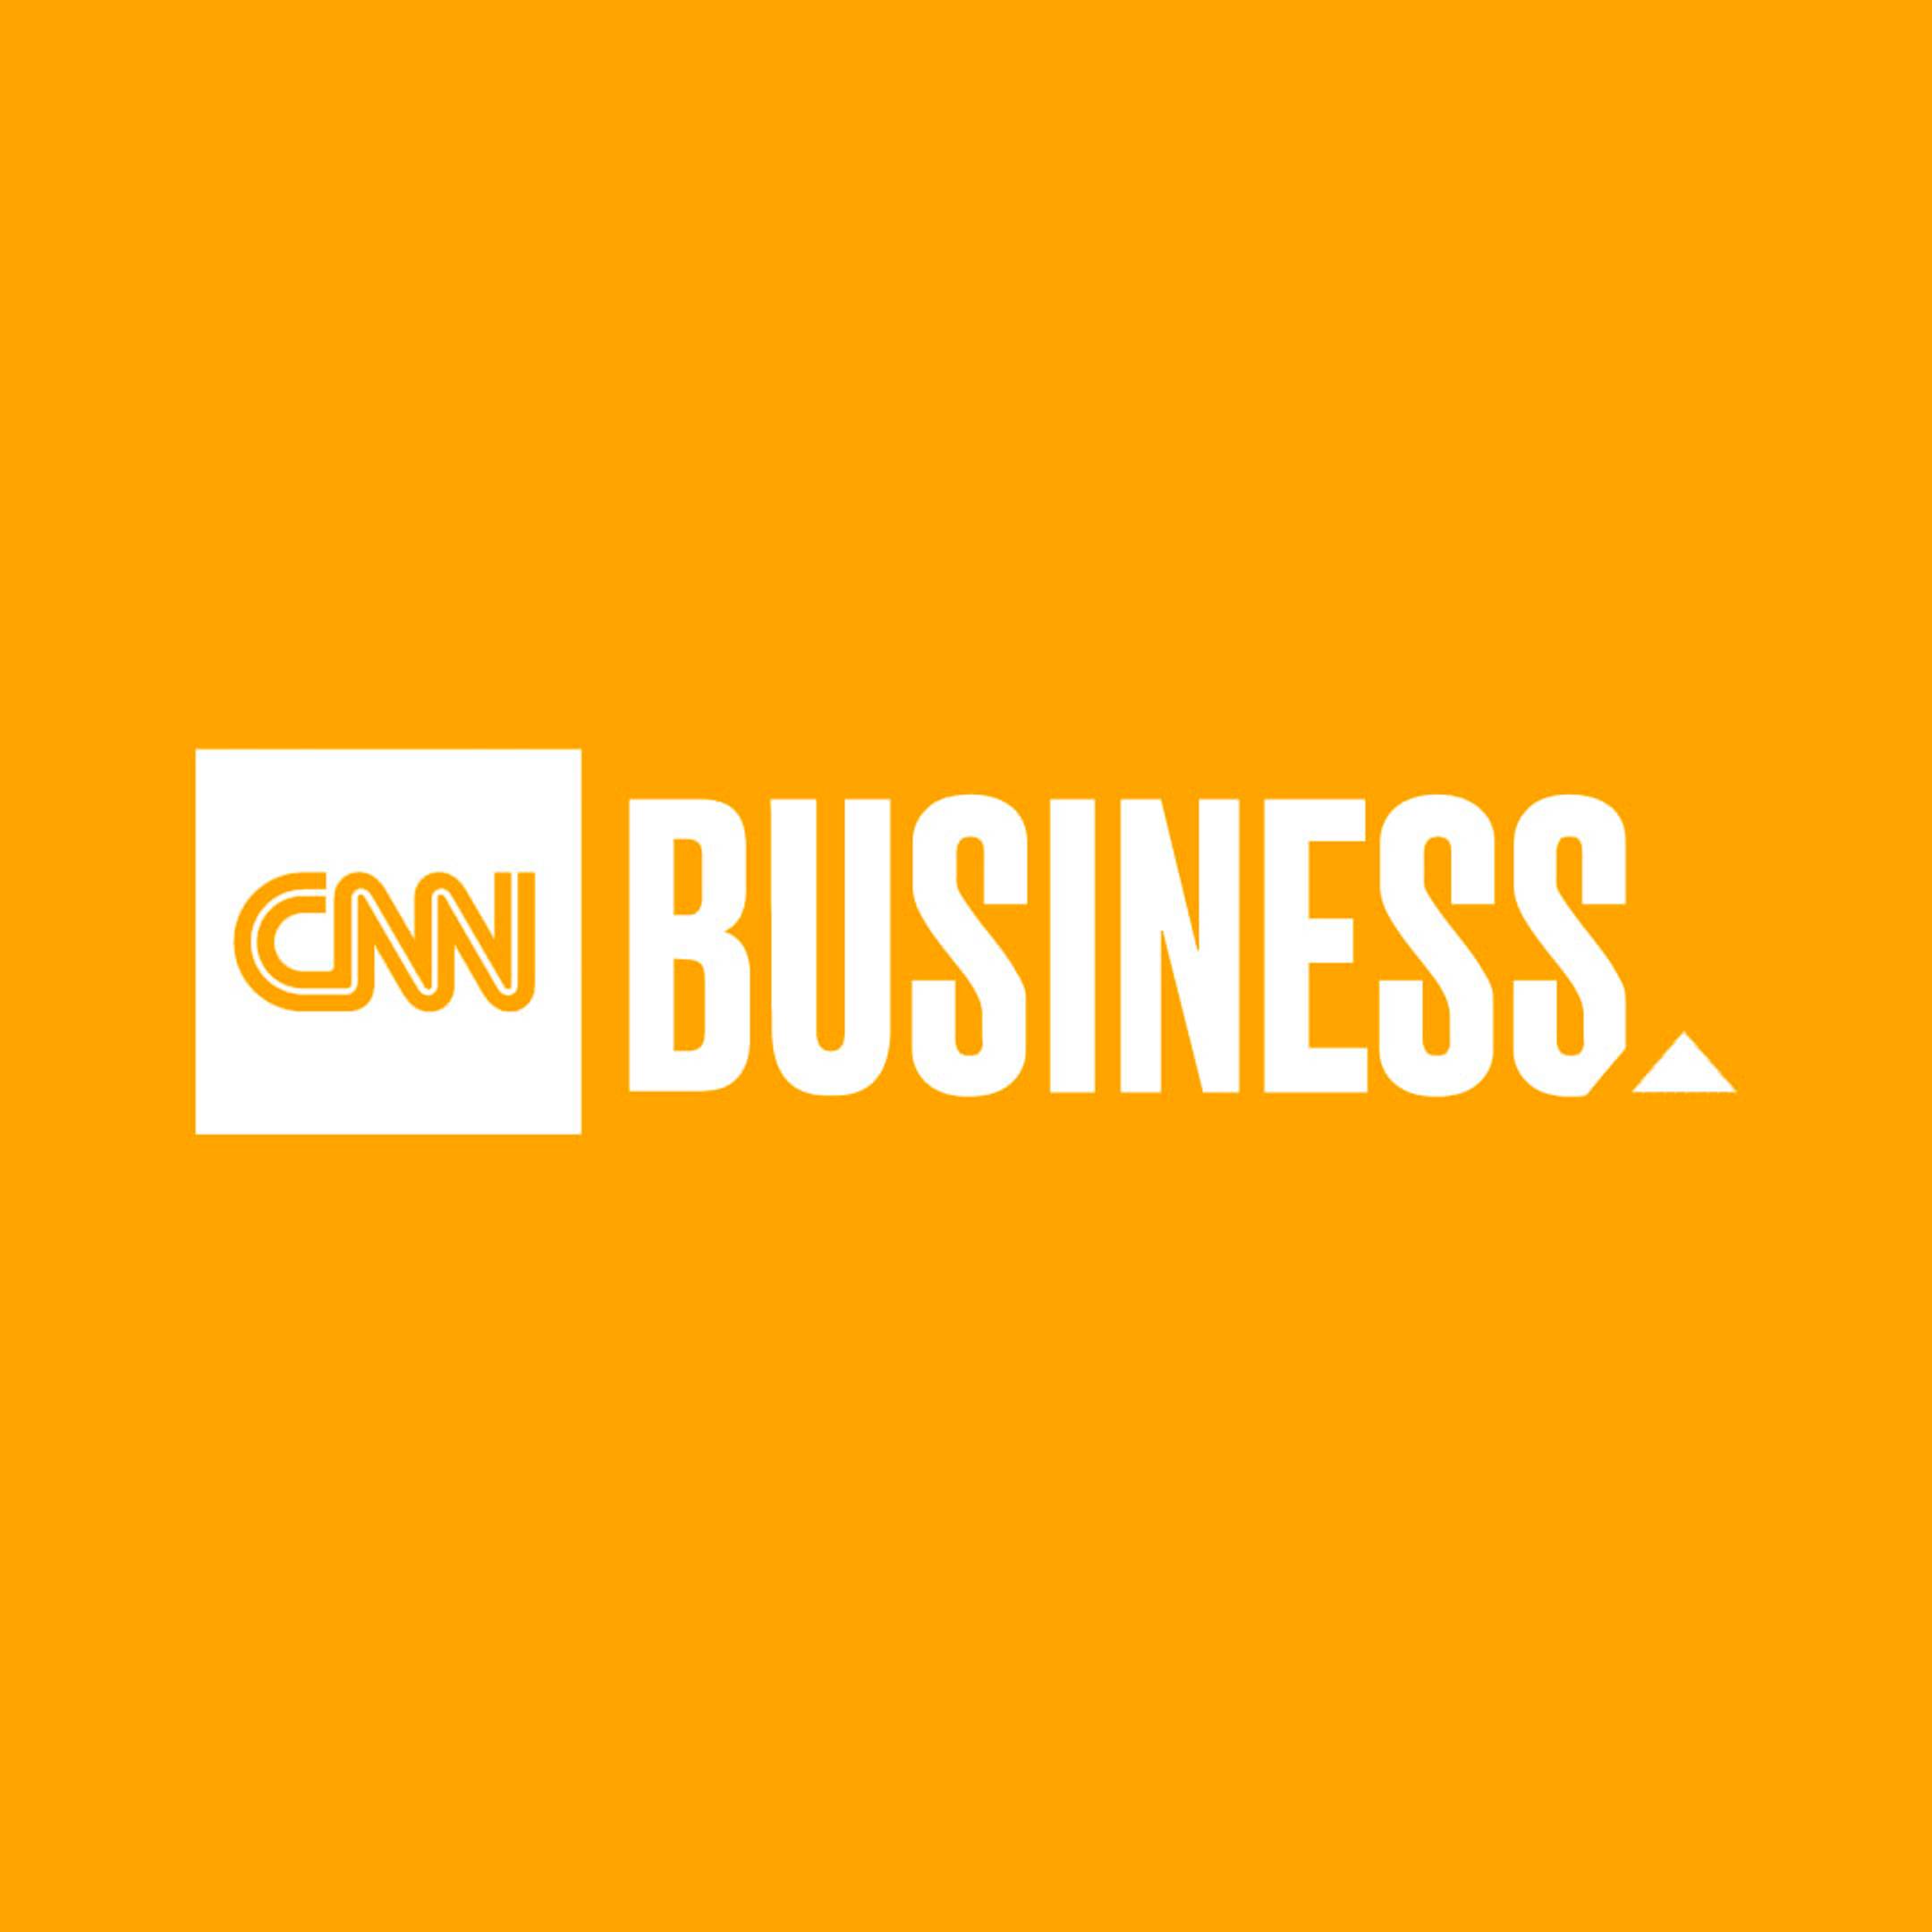 CNN Business logo on orange background 